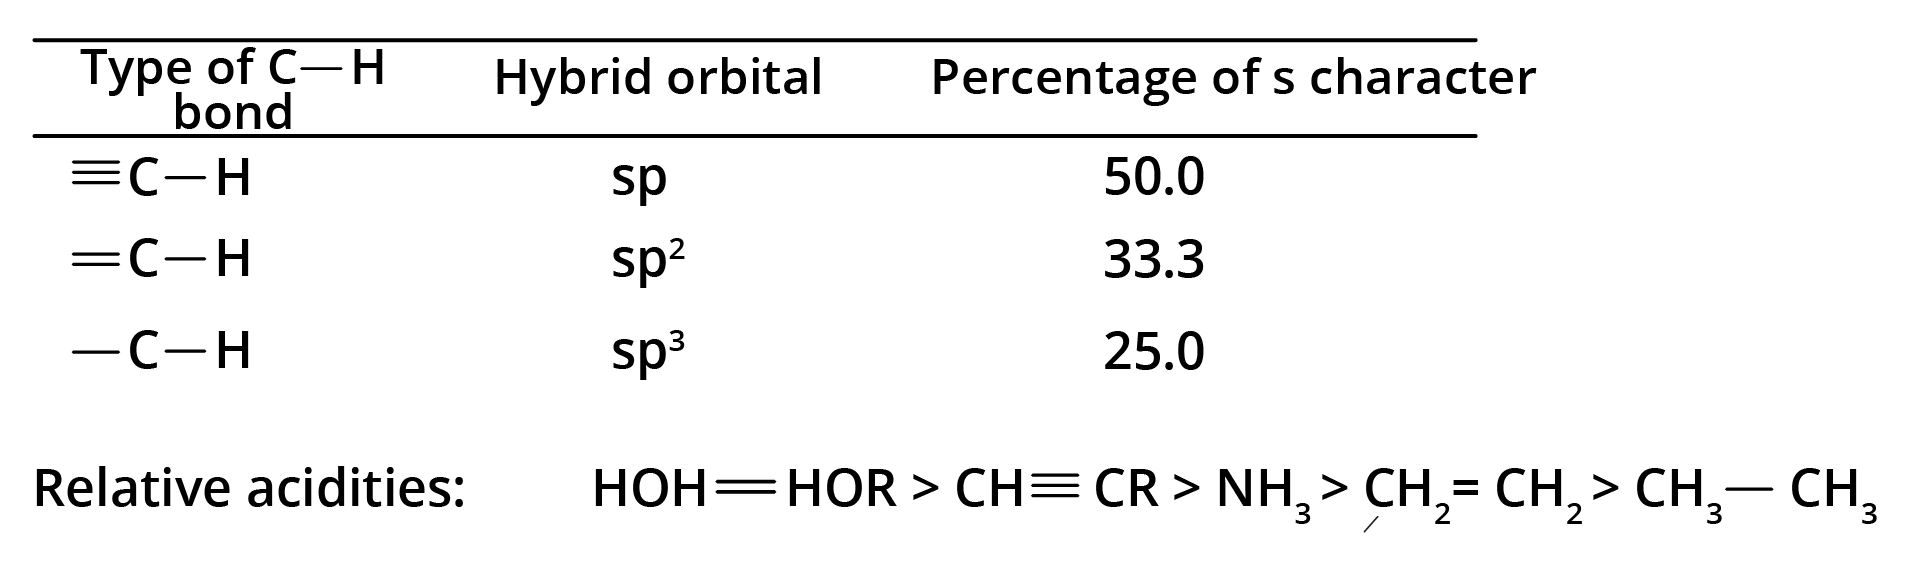 Hybridisation of Alkene, Percentage of S-Character